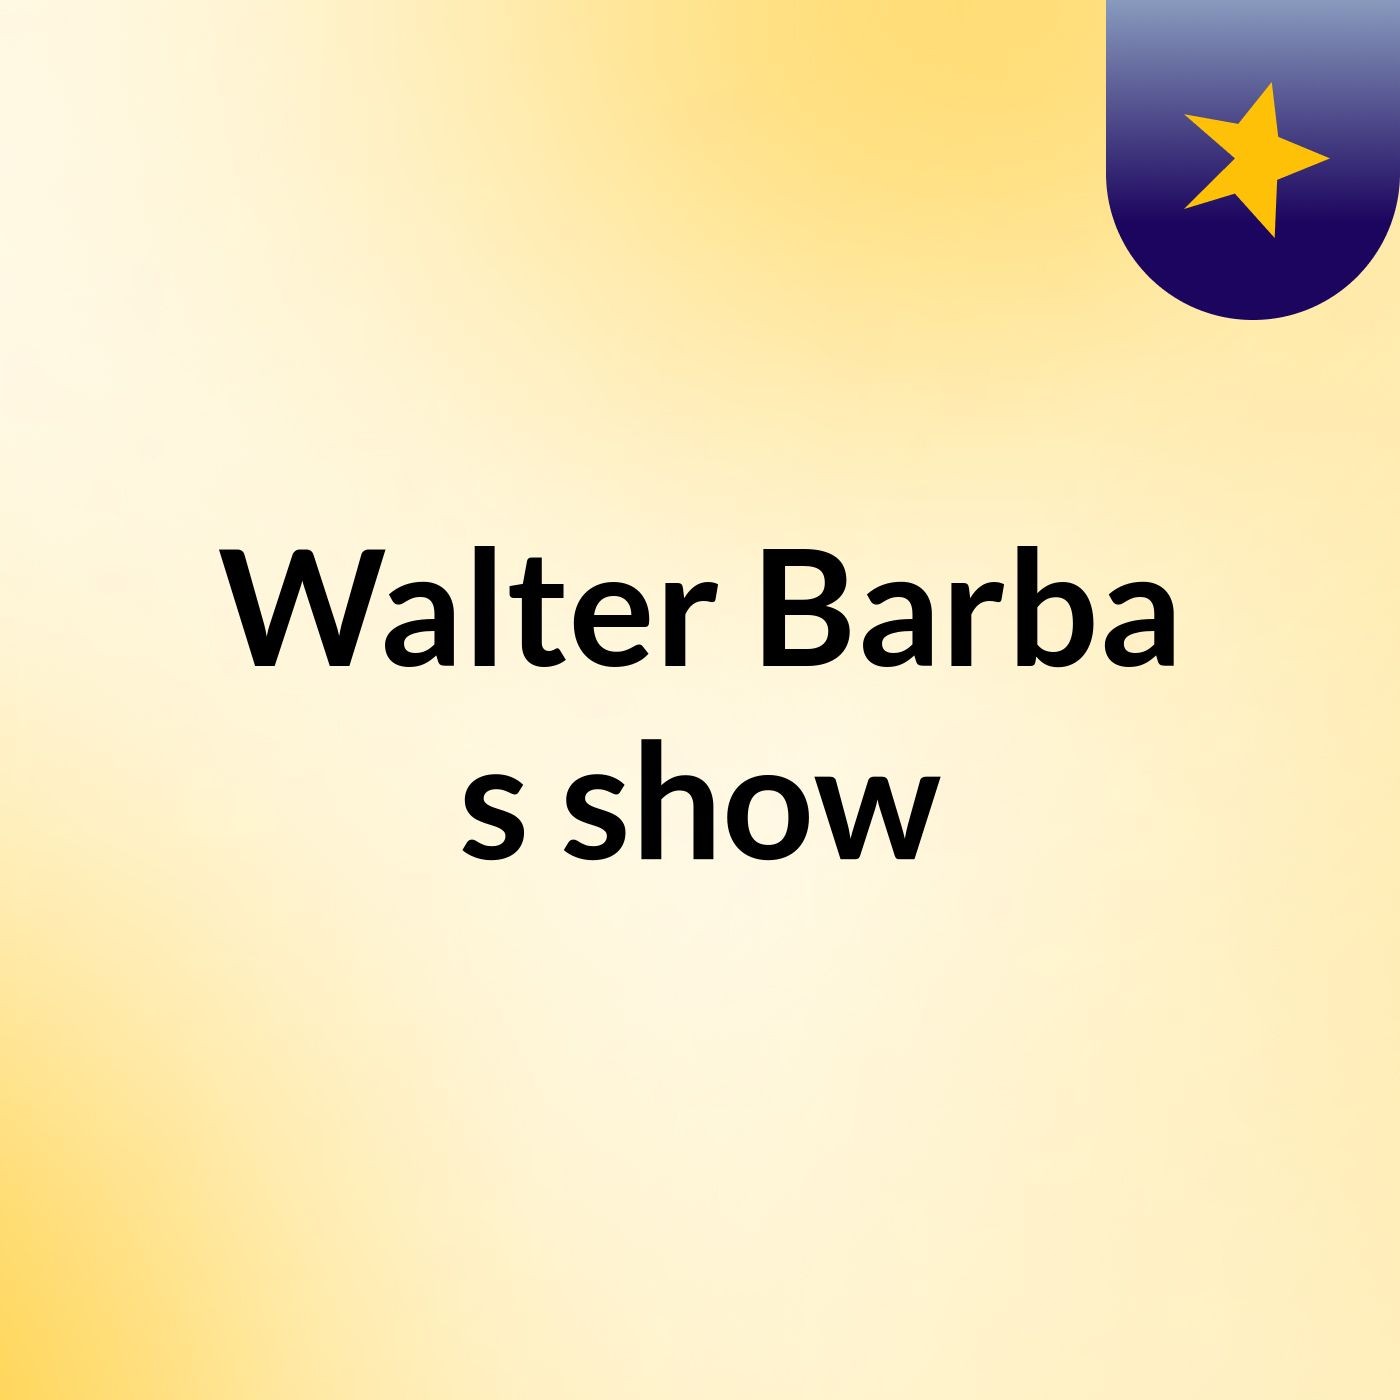 Walter Barba's show